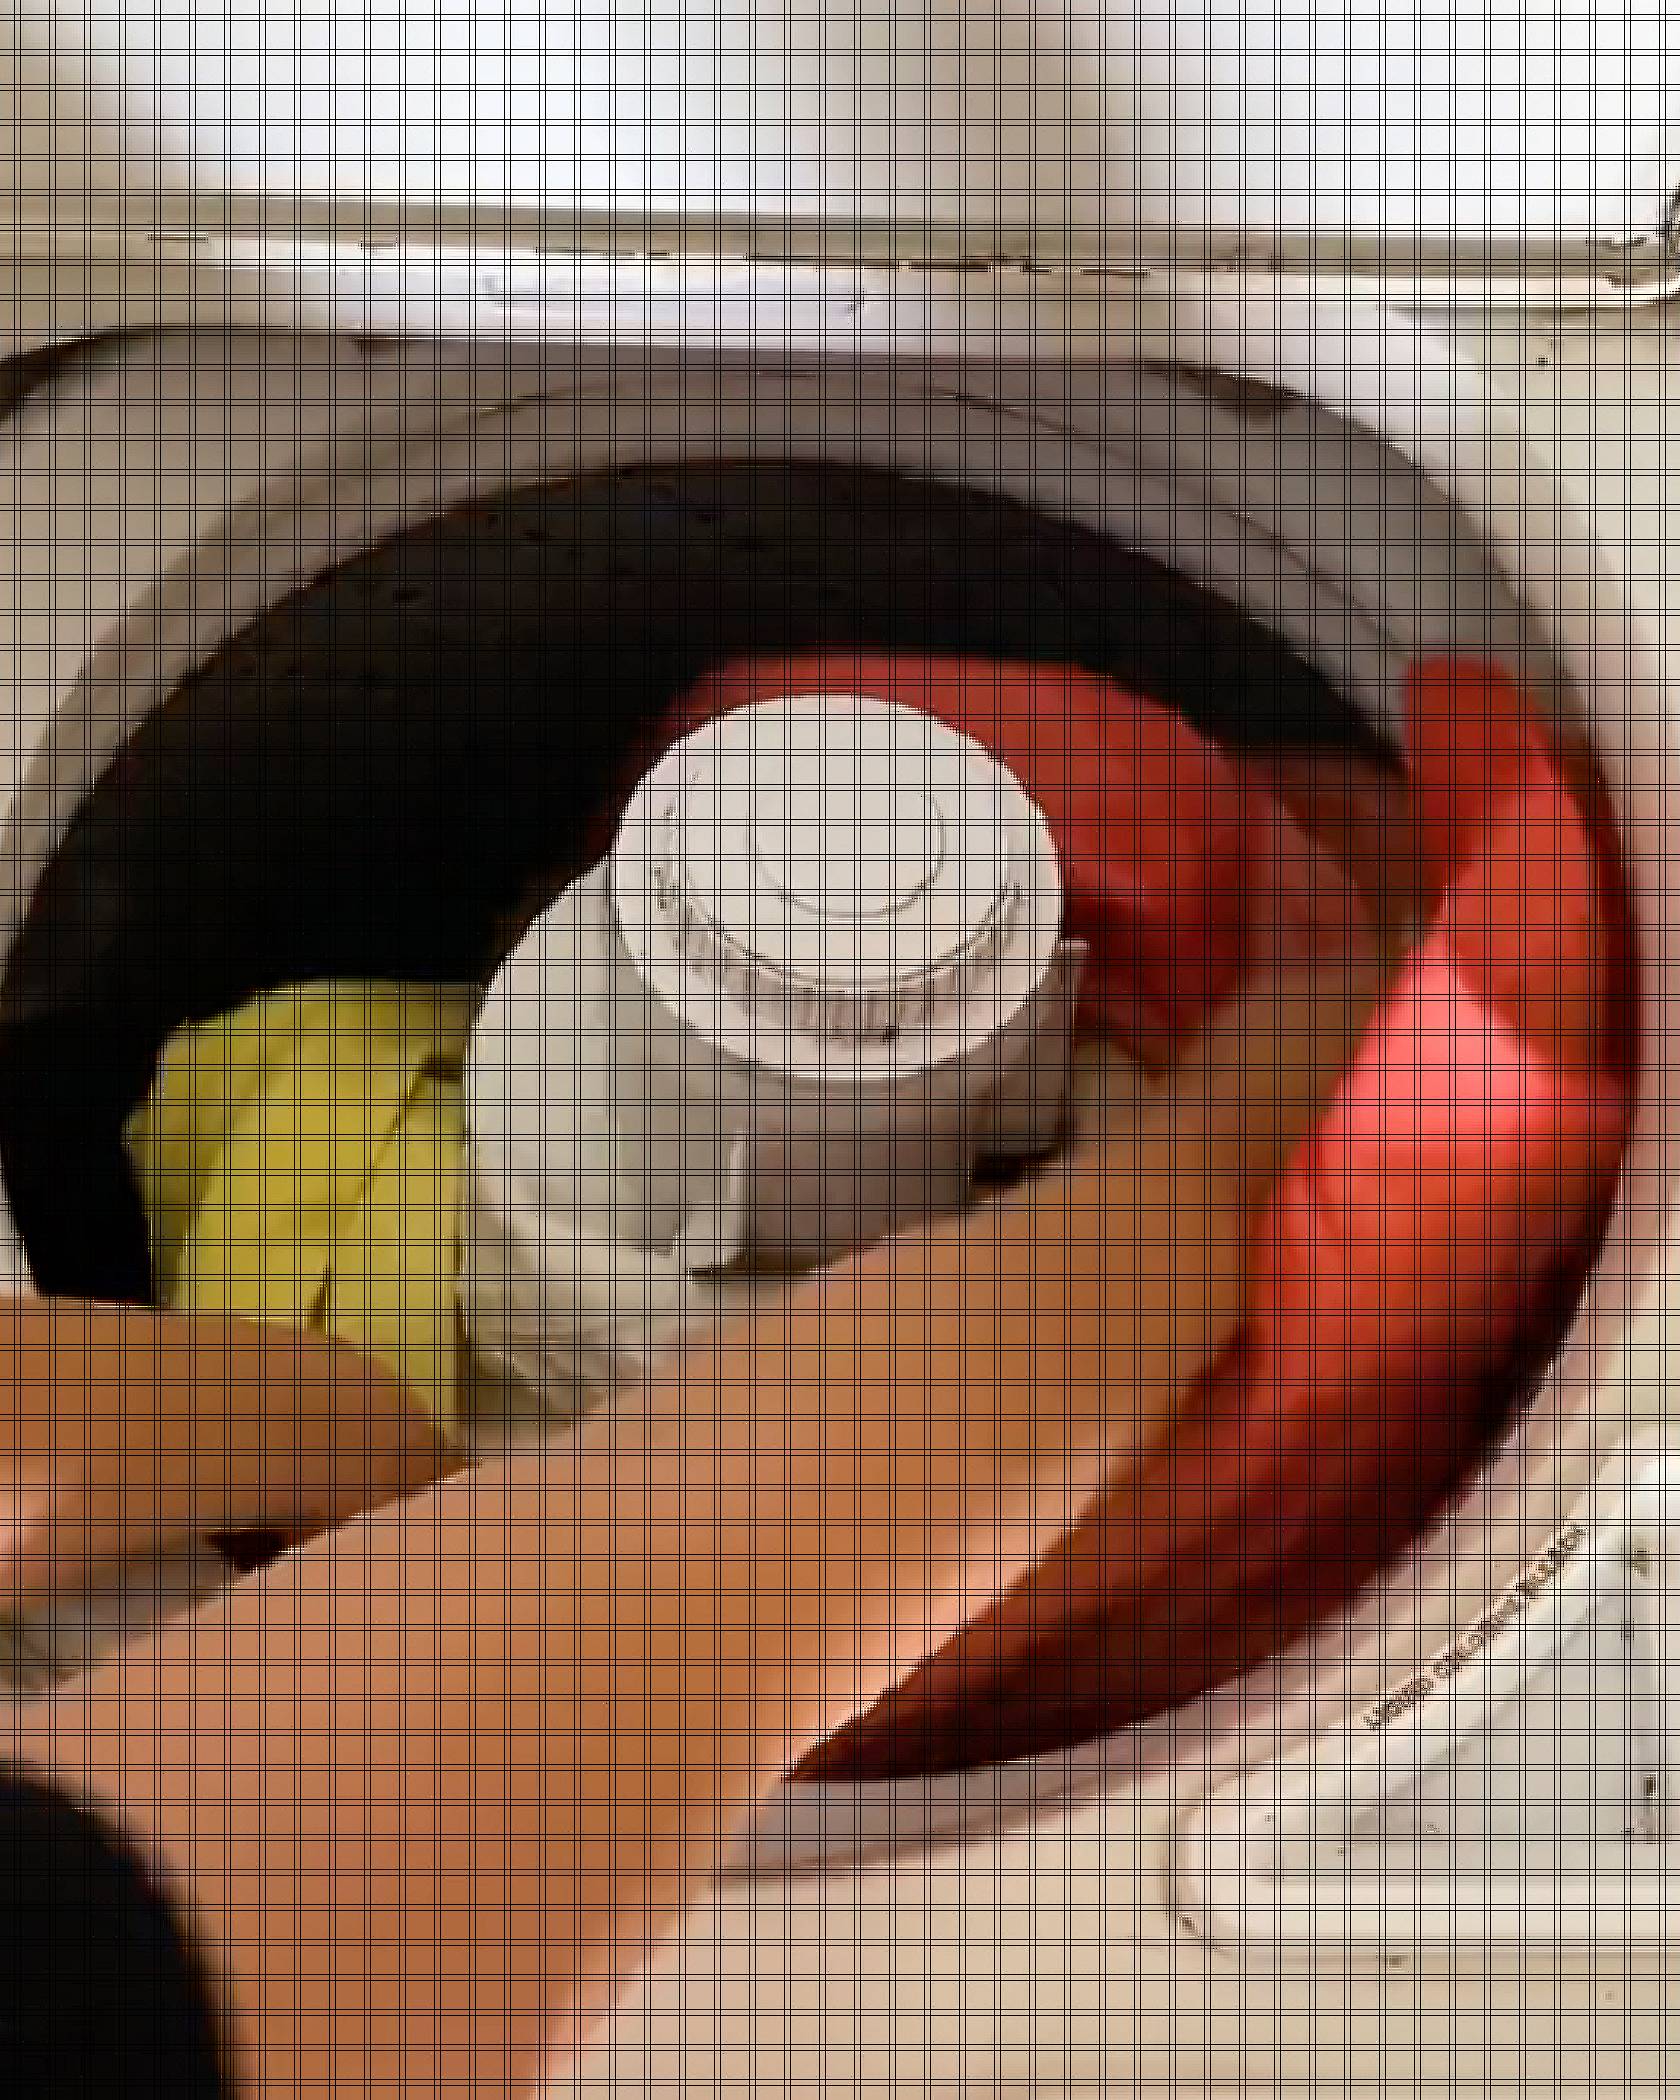 wash dyed garment in washing machine